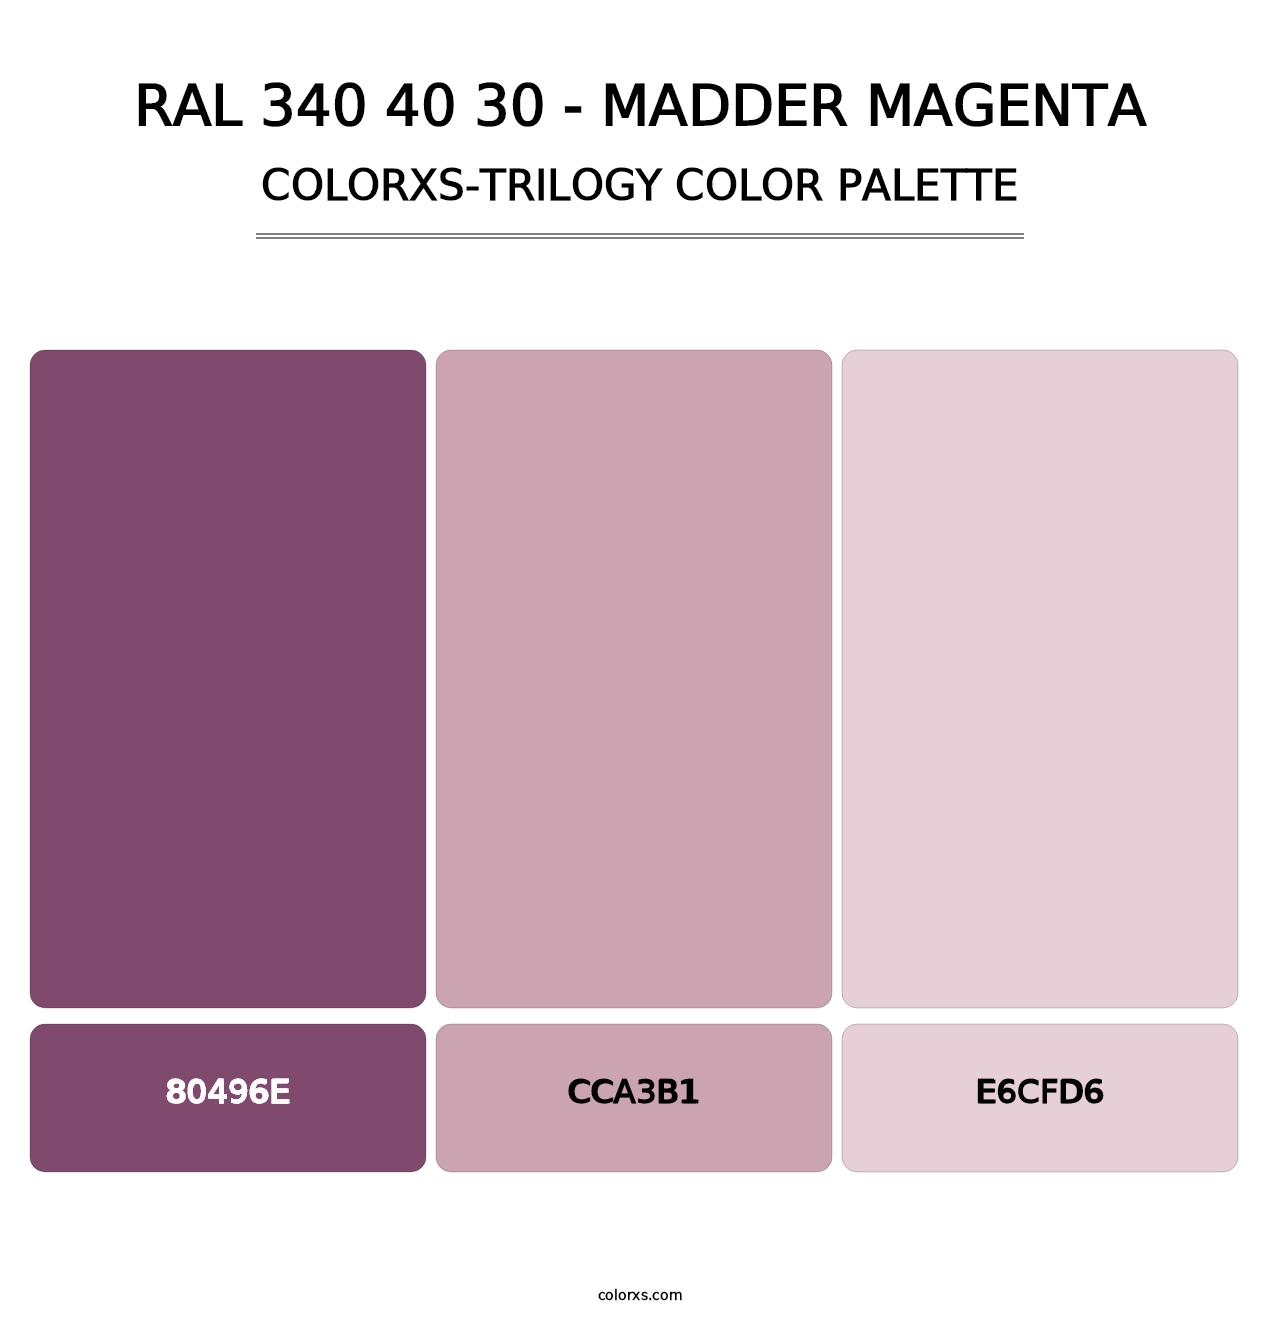 RAL 340 40 30 - Madder Magenta - Colorxs Trilogy Palette